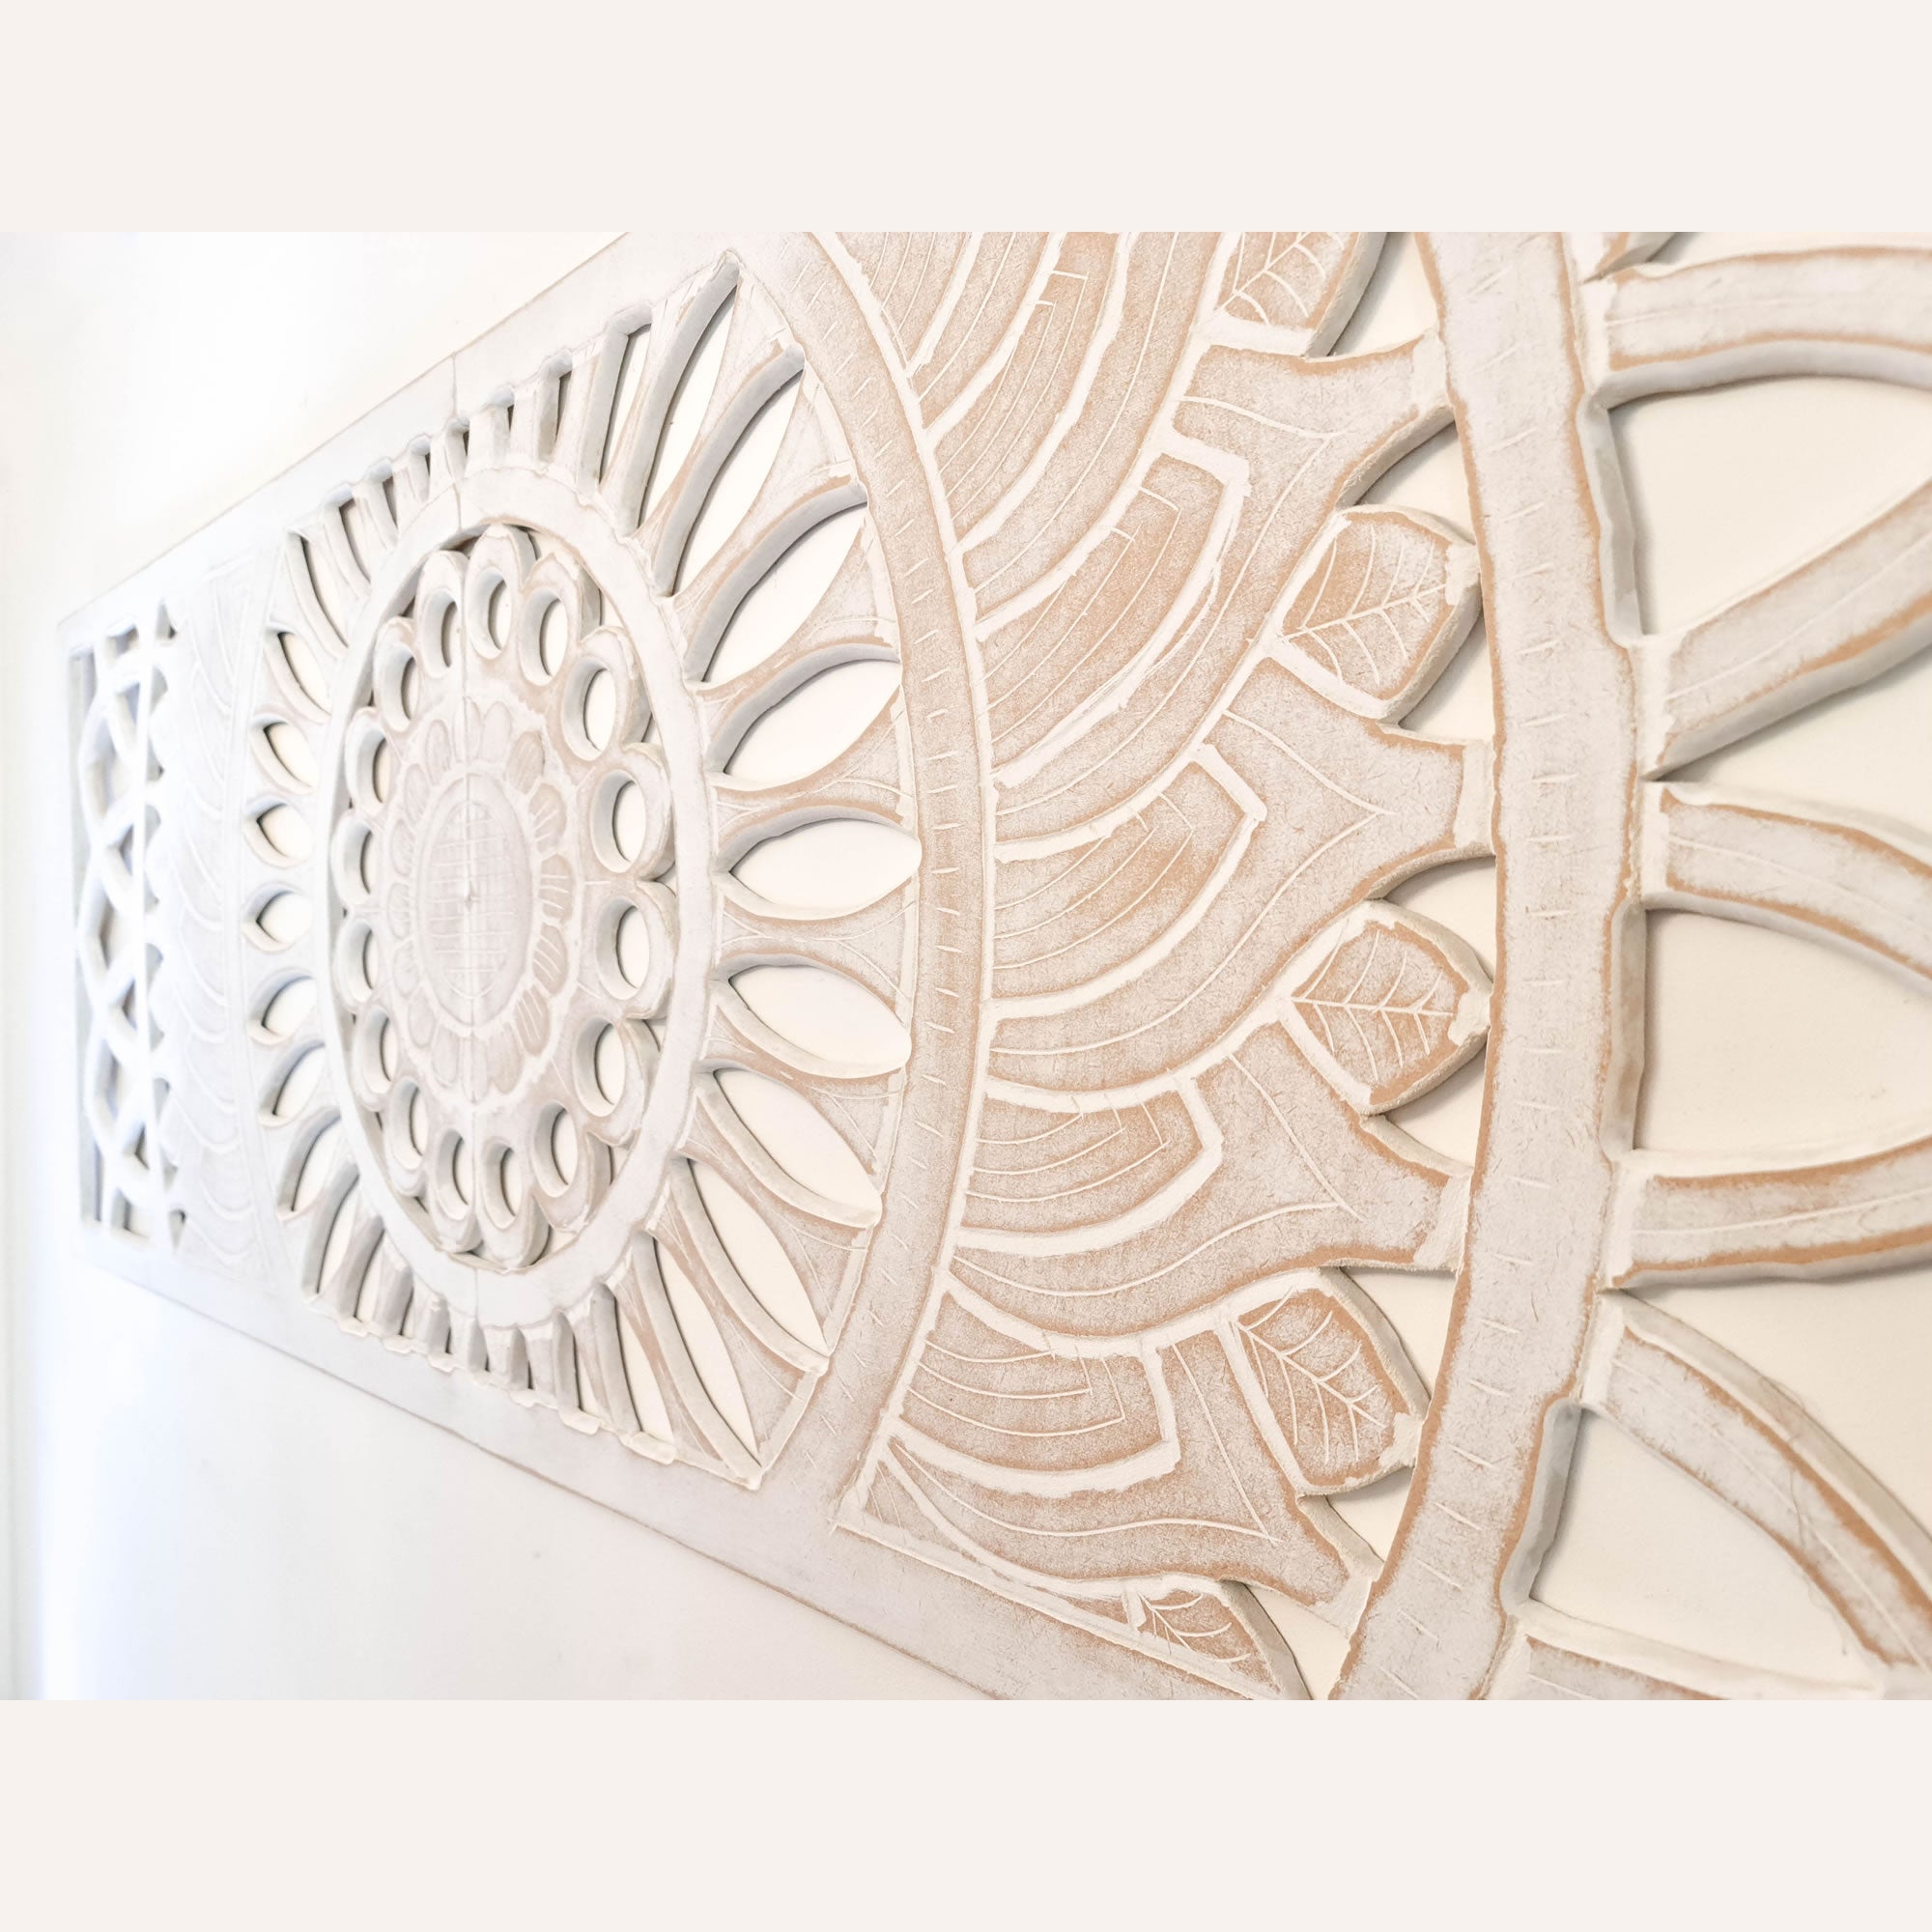 Hand Carved Wooden Wall Art - KING Headboard Decorative Mandala